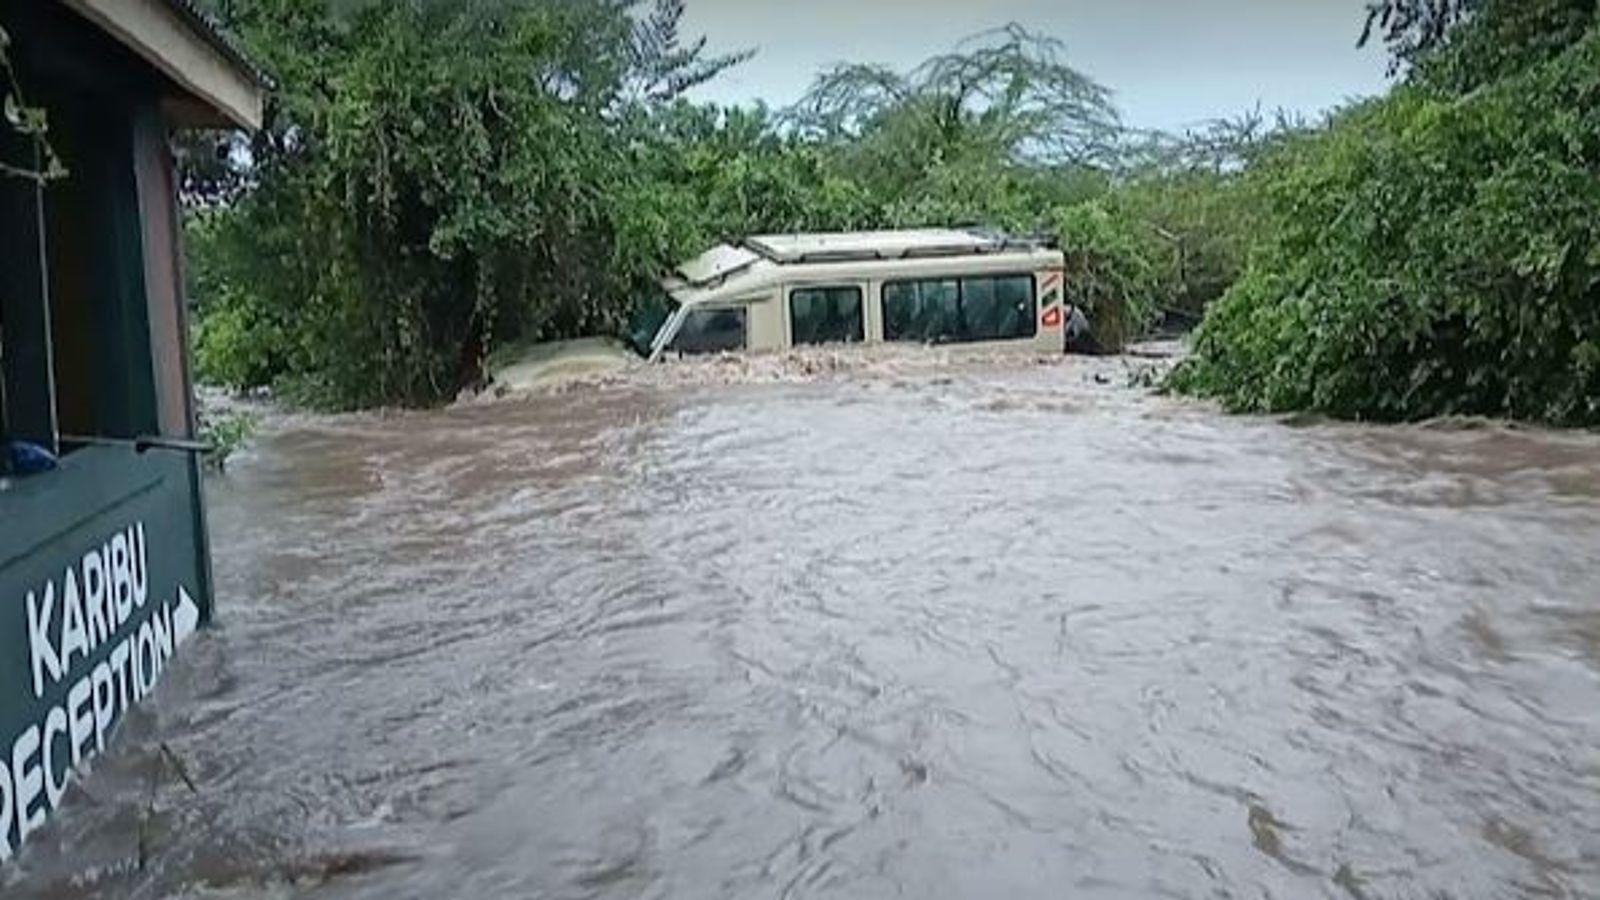 Kisah heroik pemandu wista ketika banjir besar di Kenya yang tewaskan ratusan orang